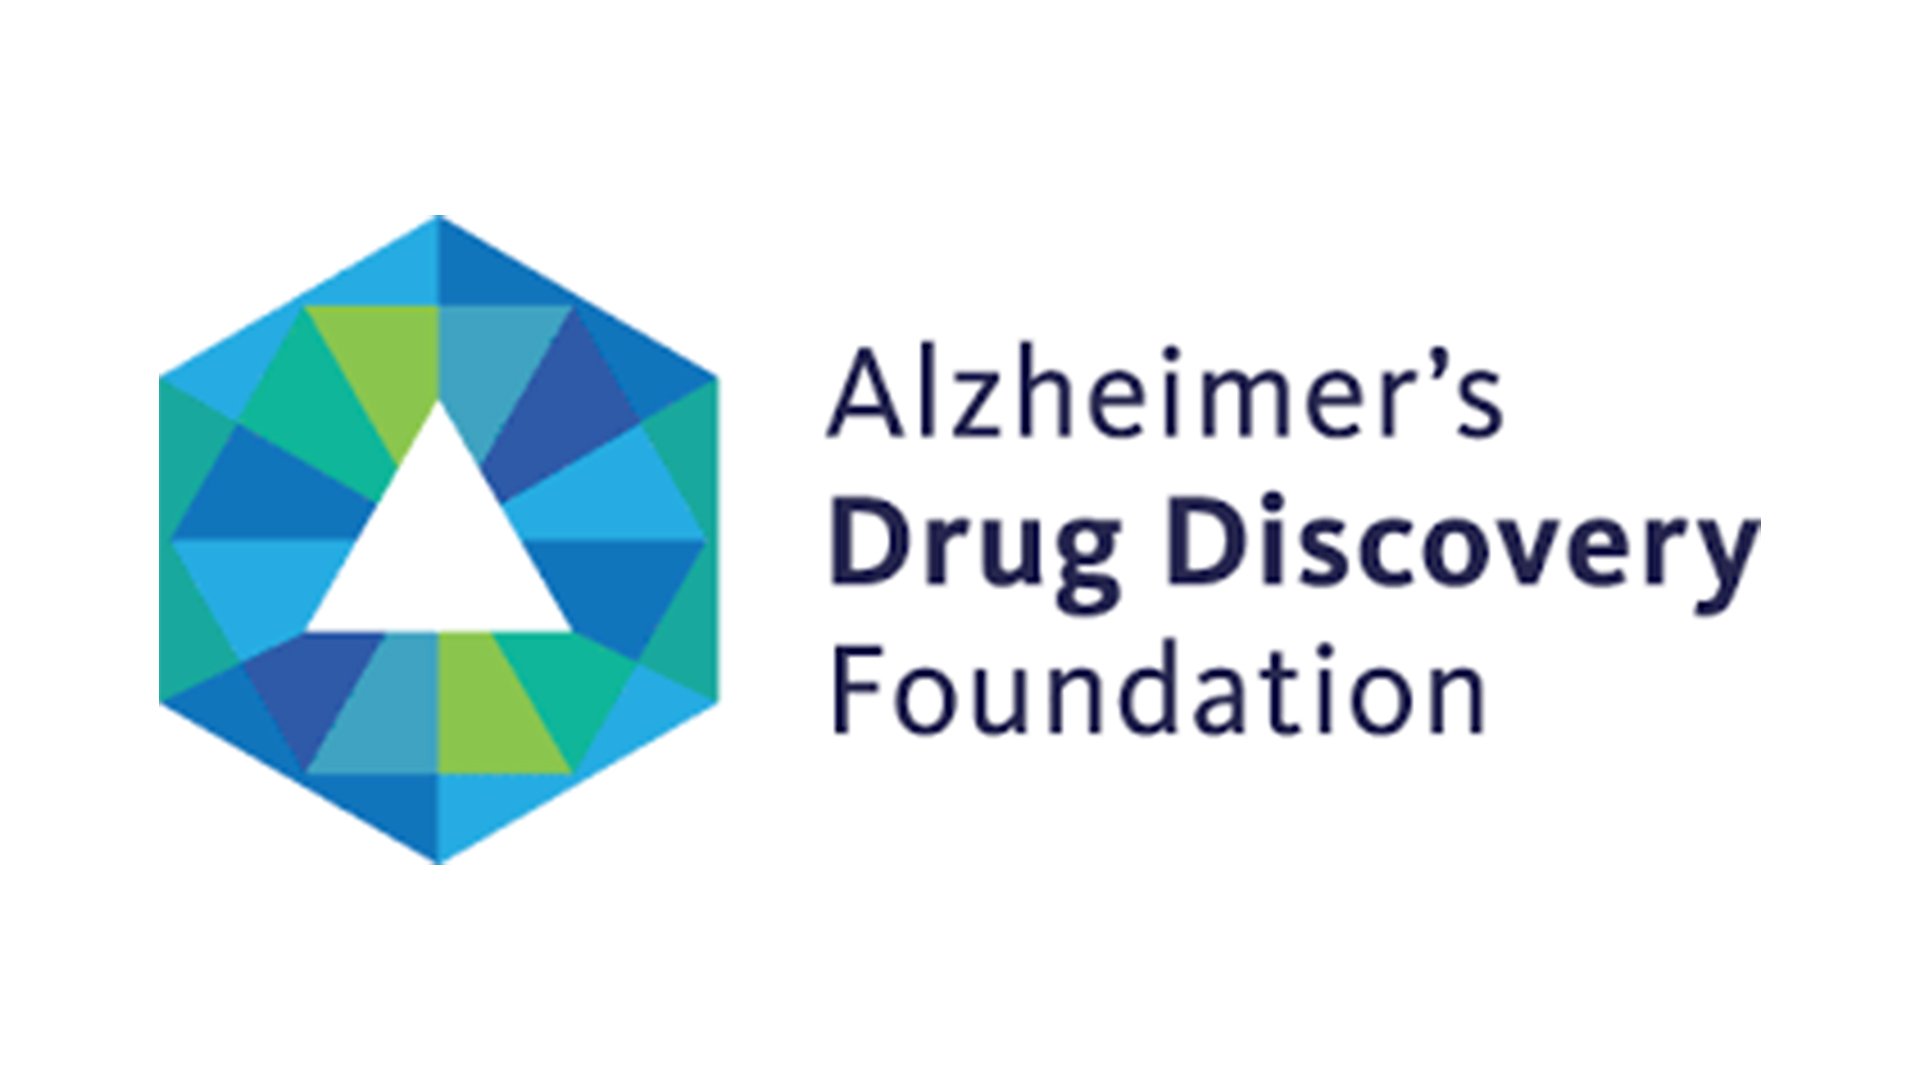 CEOi_0019_Alzheimer’s Drug Discovery Fund.jpg